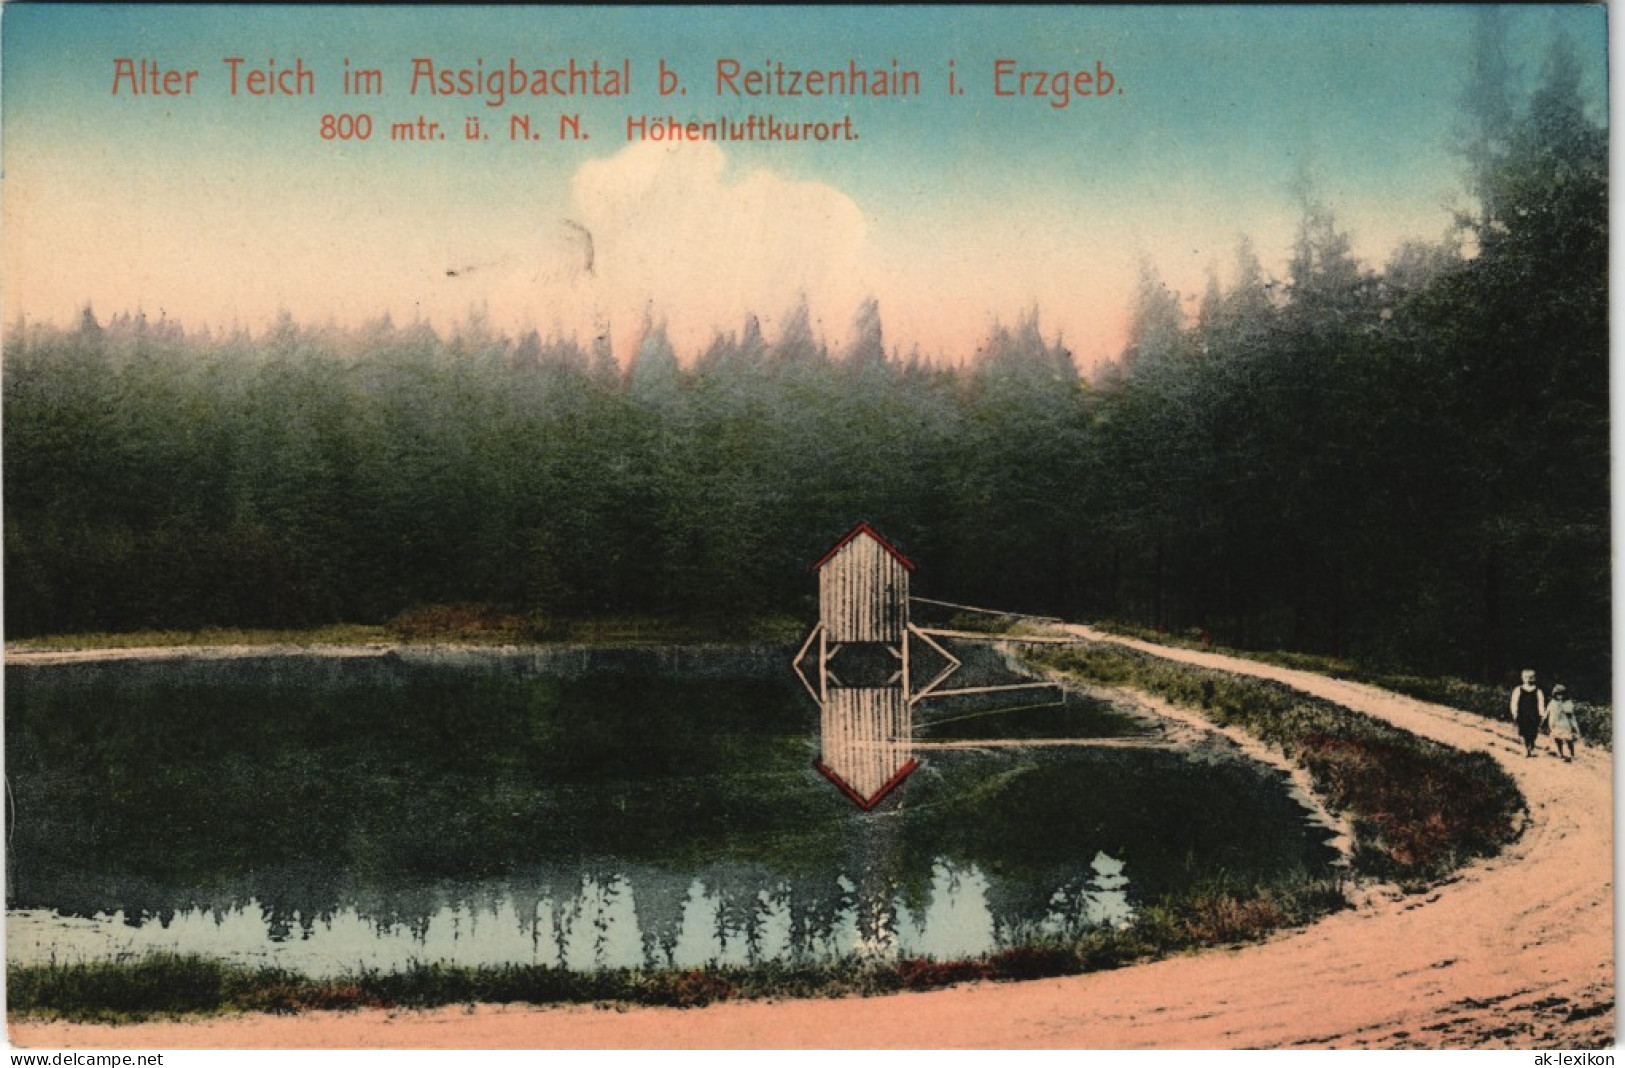 Reitzenhain-Marienberg Im Erzgebirge Alter Teich Hütte Assigbachtal 1913 - Marienberg